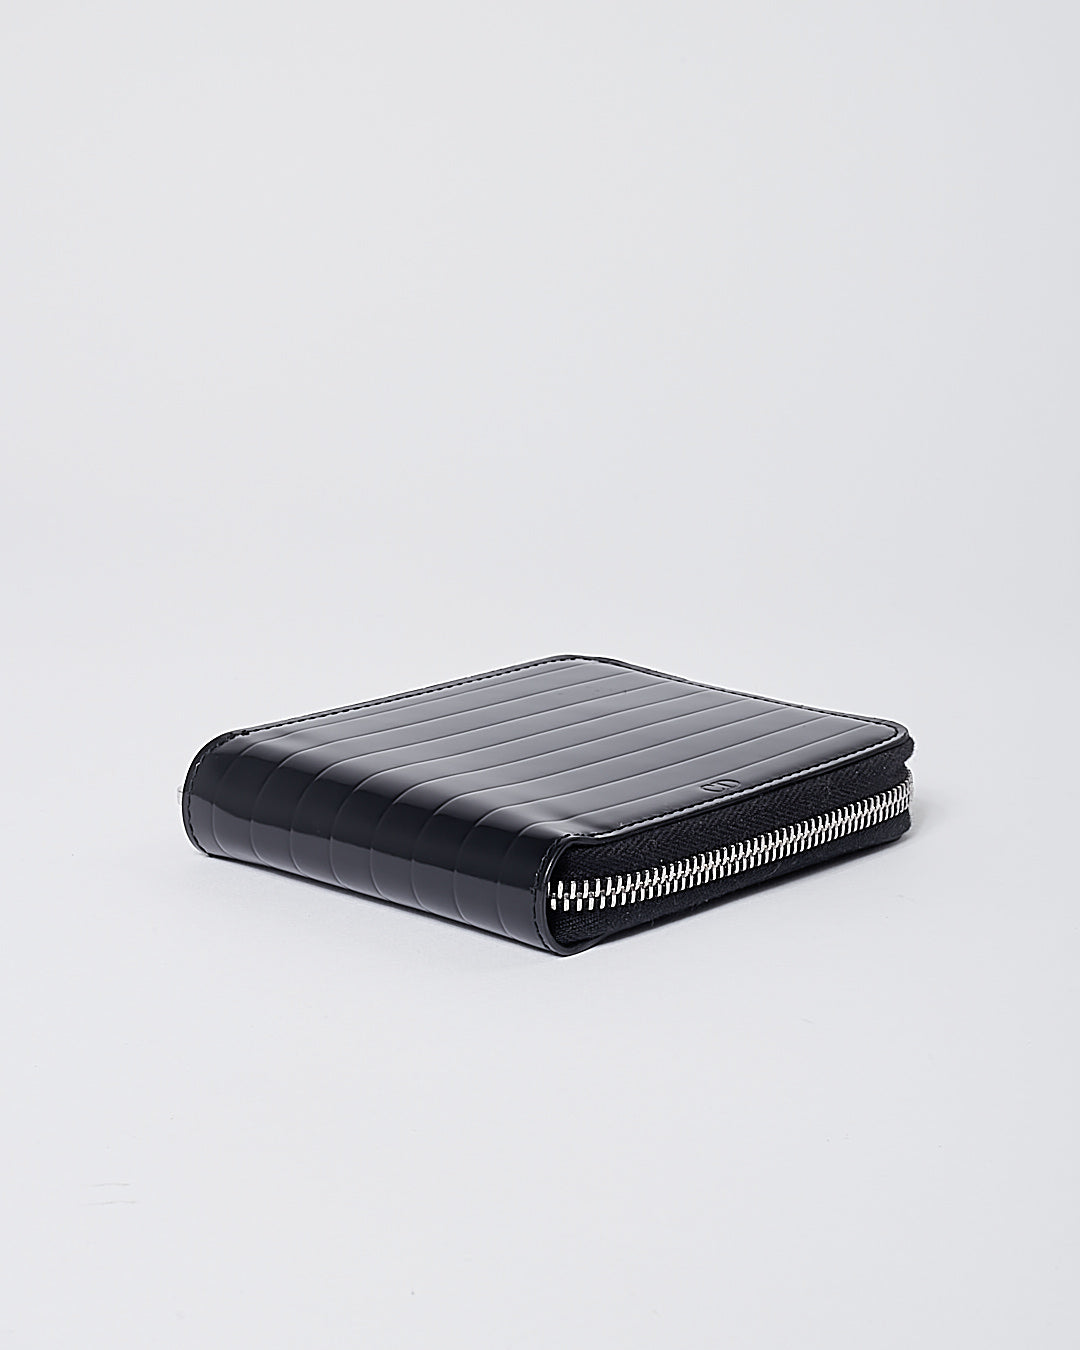 Dior Homme Black Patent Zippy Wallet